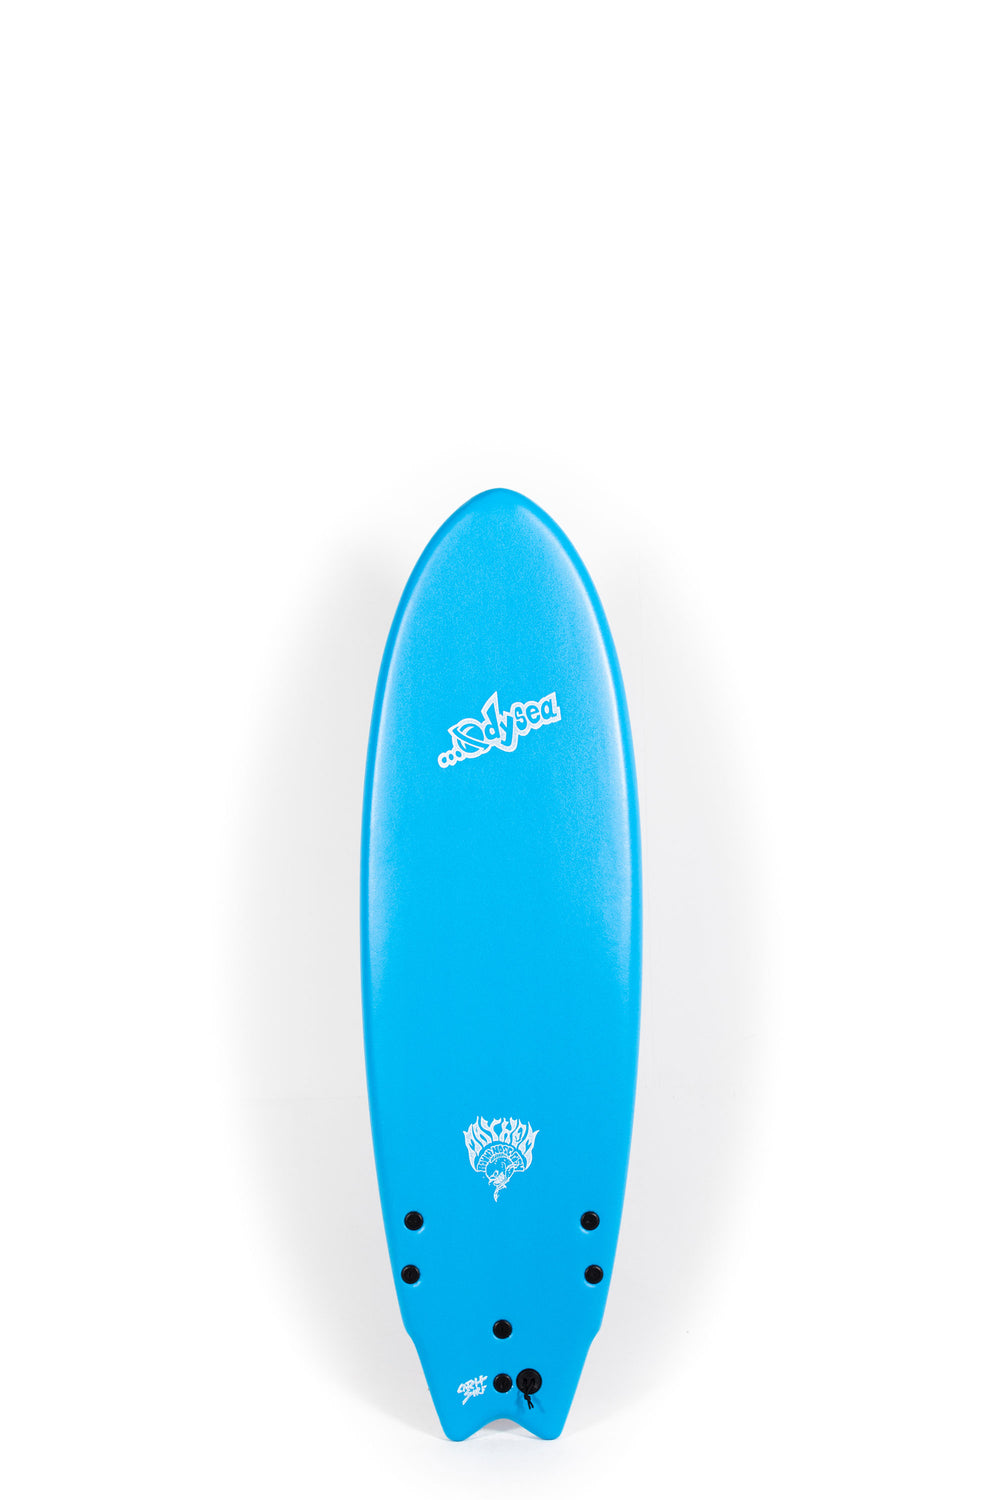 Pukas-Surf-Shop-Catch-Surf-Surfboards-Odisea-Round-Nose-Fish-Blue